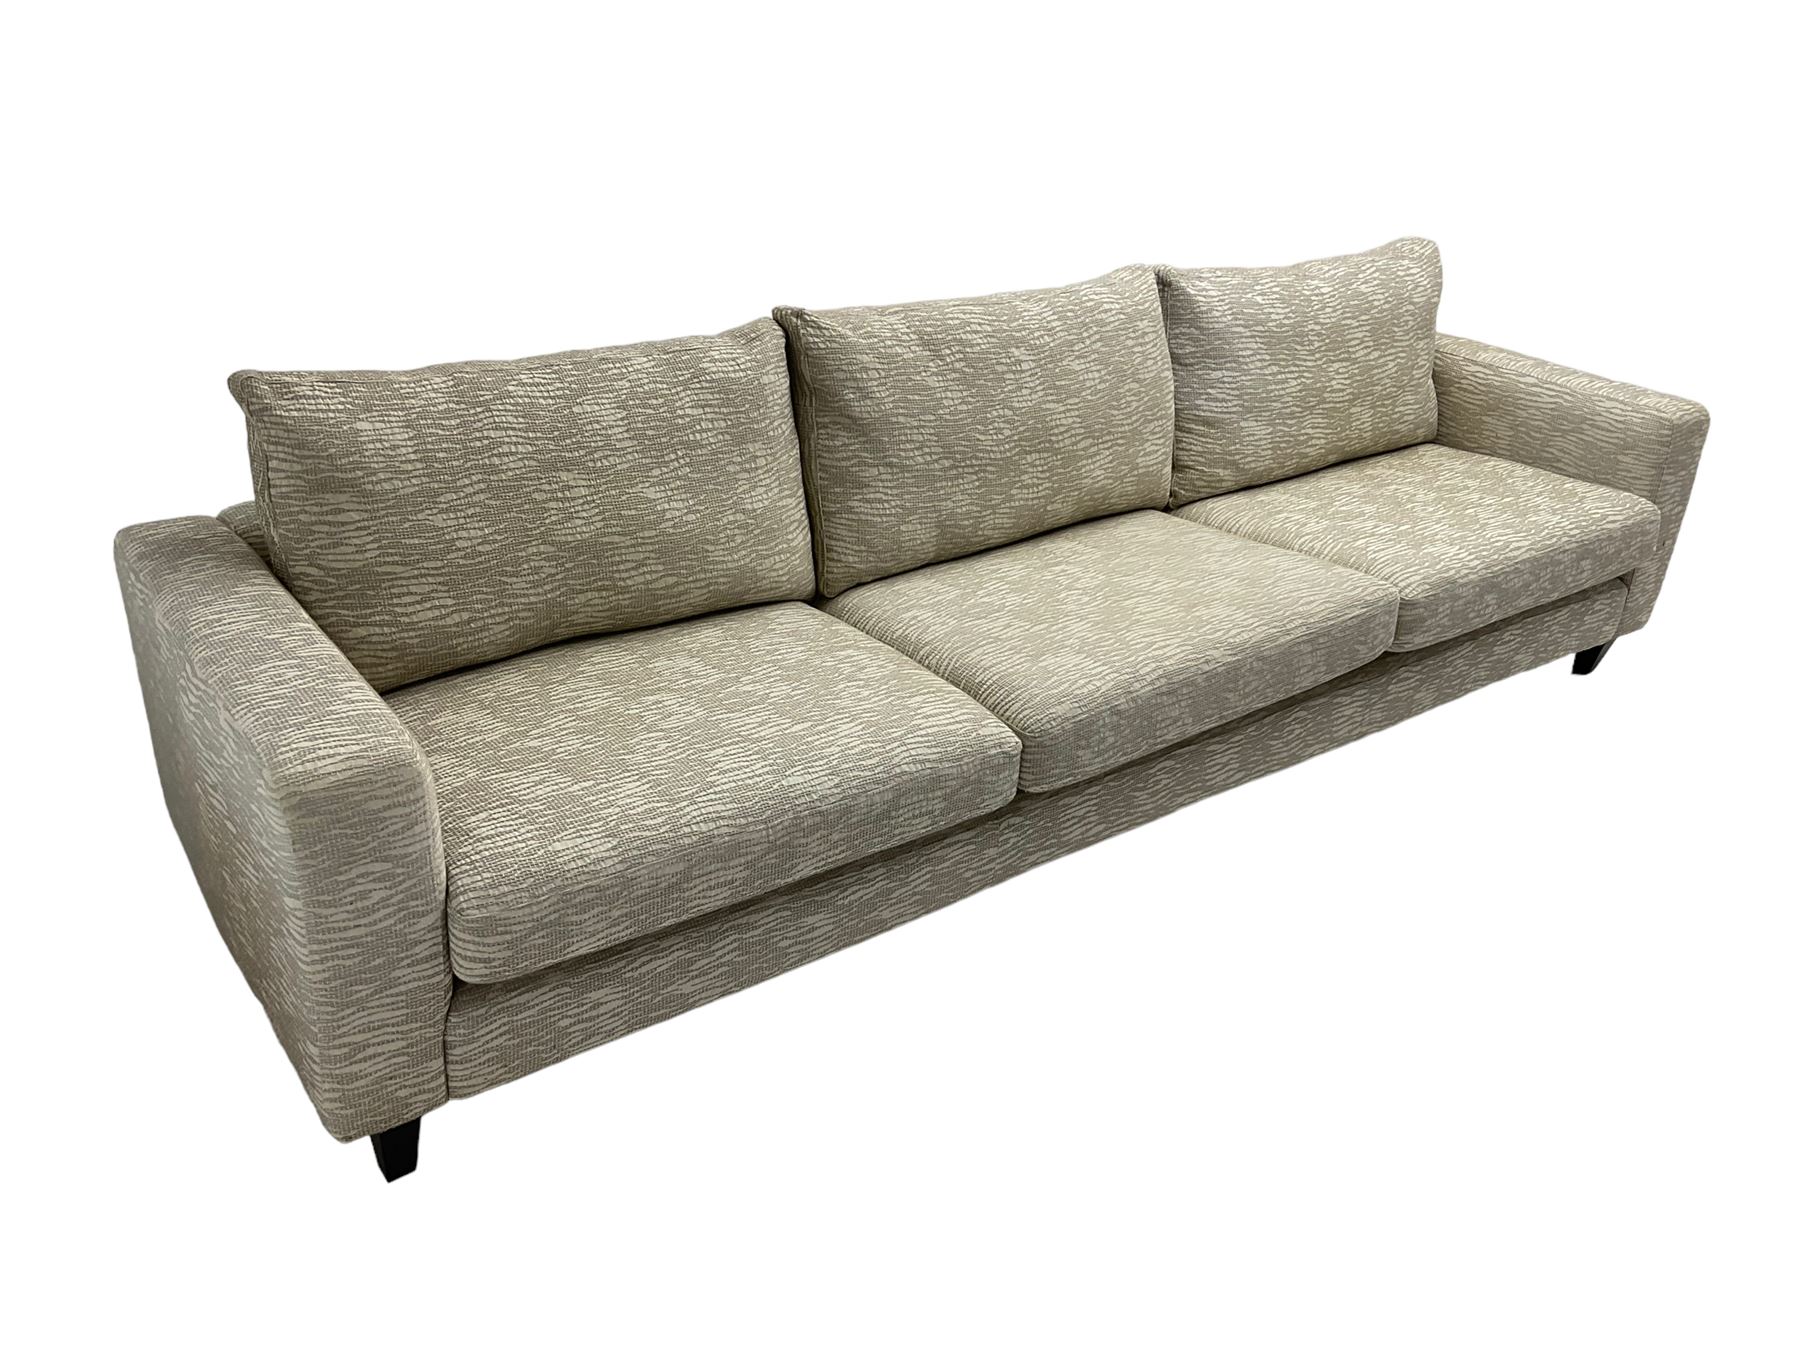 Orior - contemporary large three seat sofa - Image 2 of 7